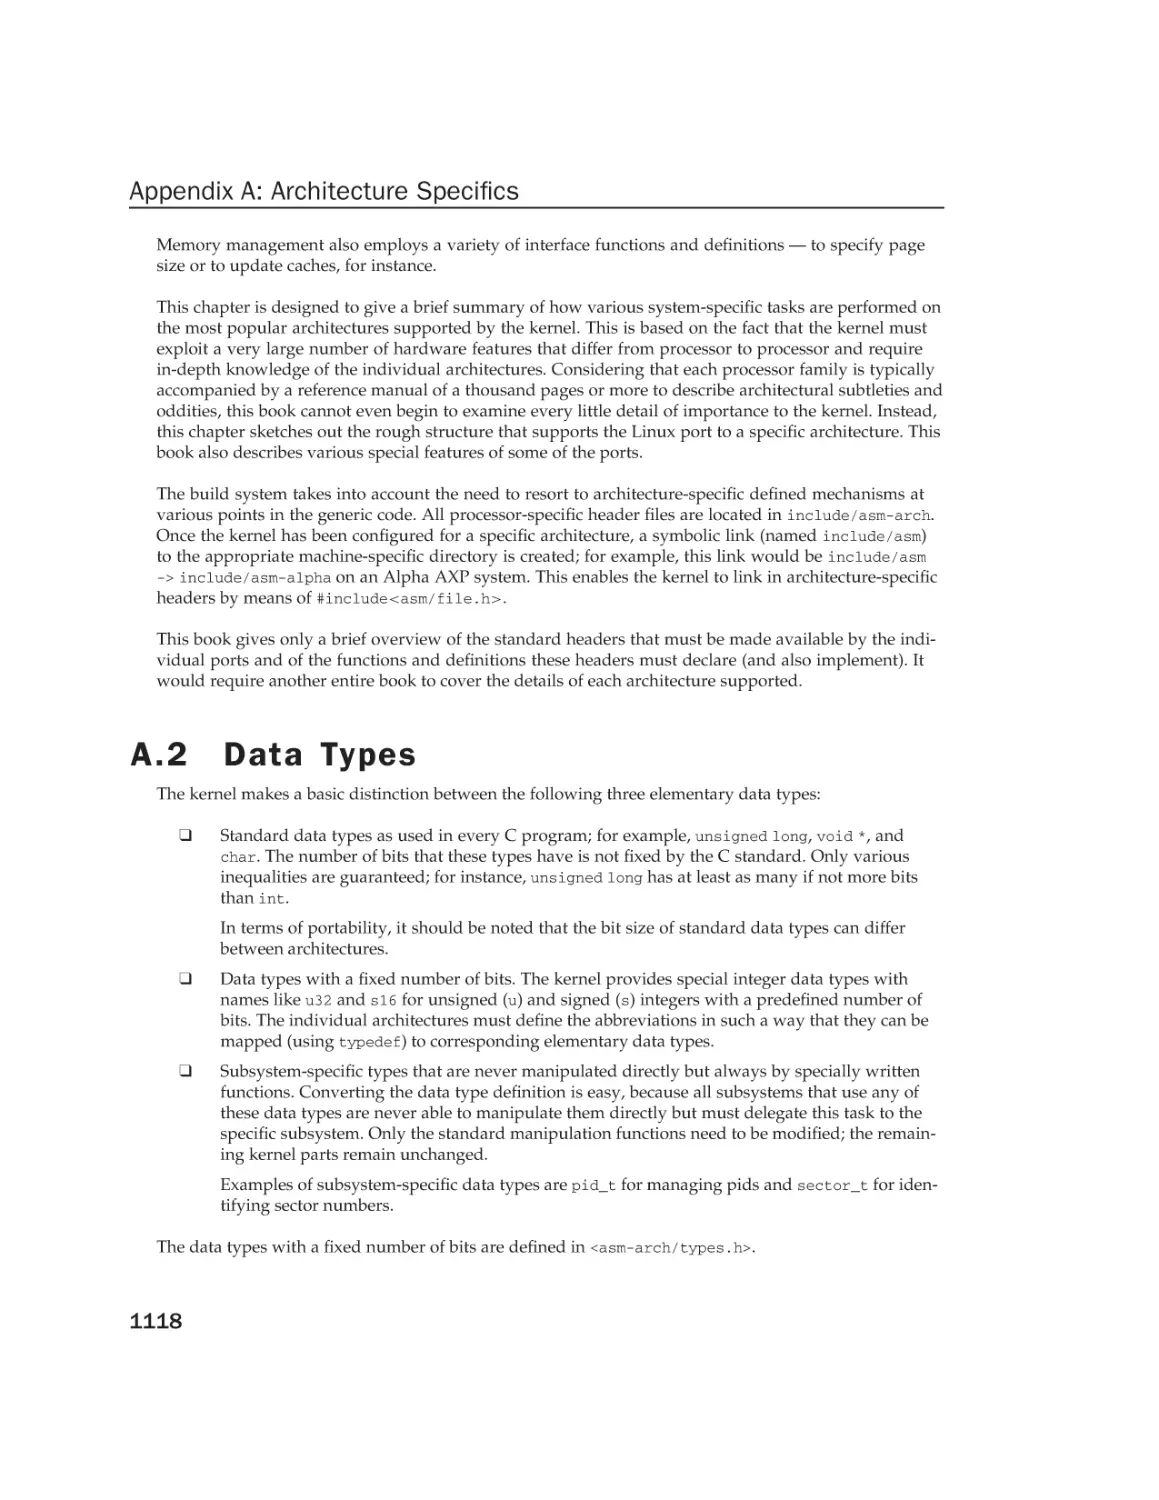 A.2 Data Types